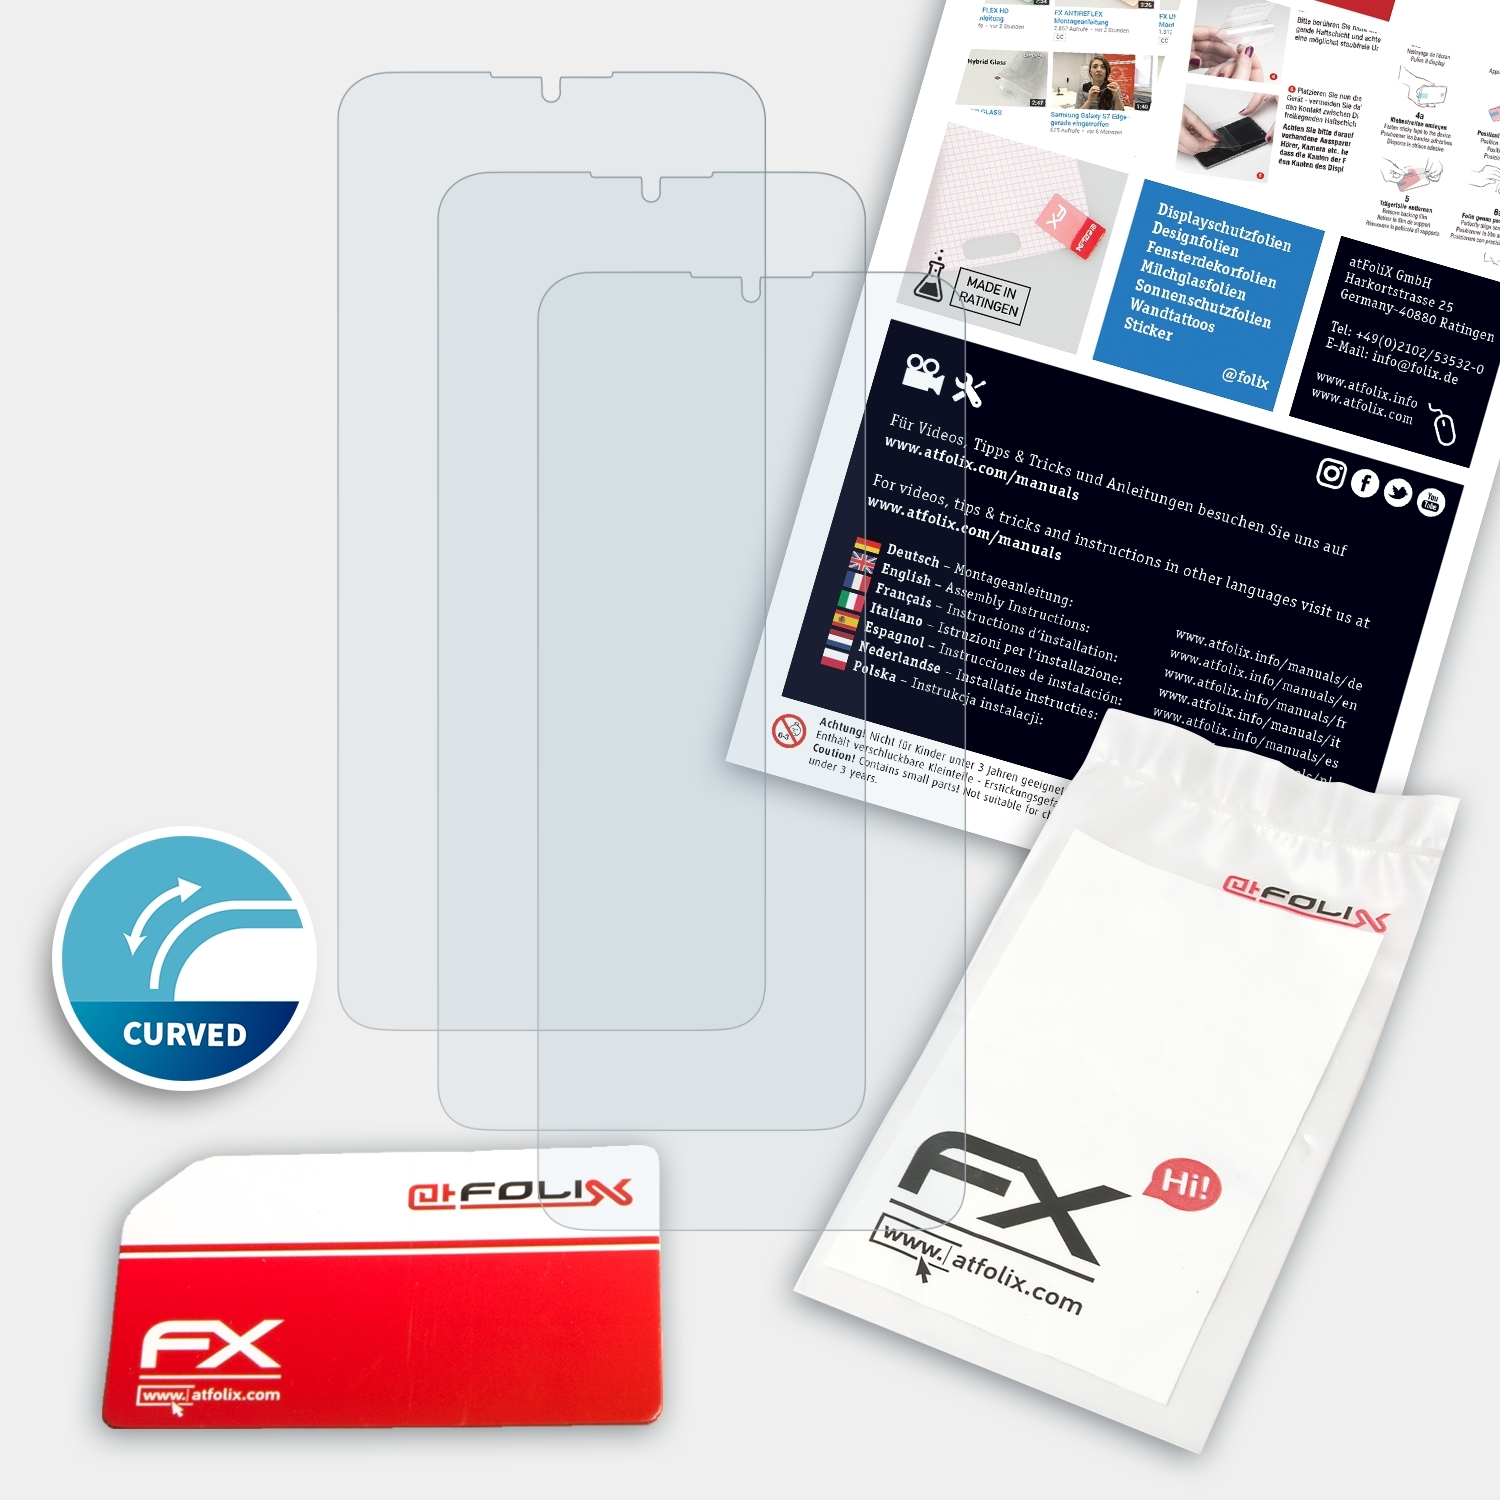 3x (2019)) Displayschutz(für ATFOLIX FX-ActiFleX 3X Alcatel